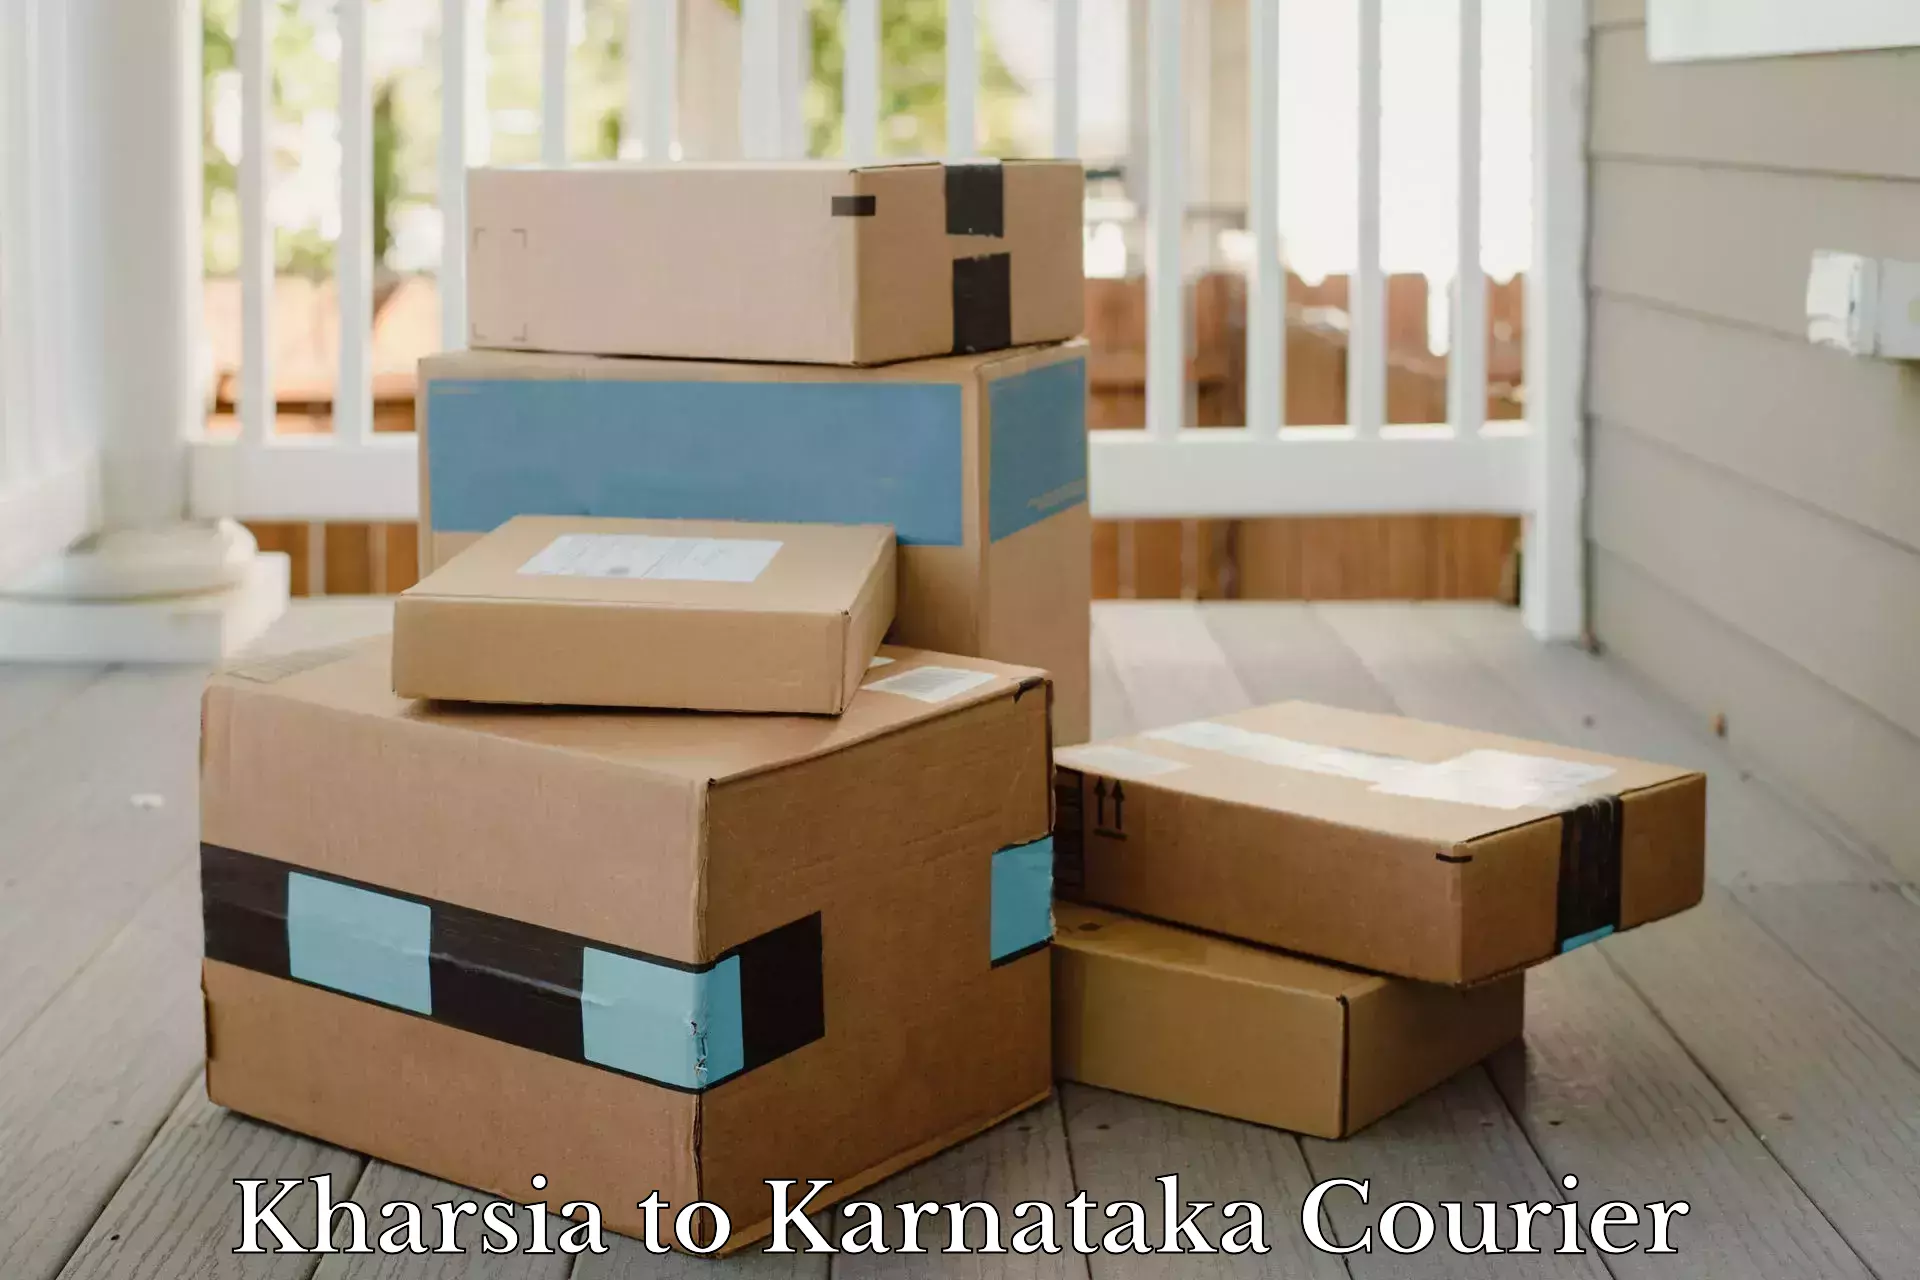 Emergency parcel delivery in Kharsia to Karnataka